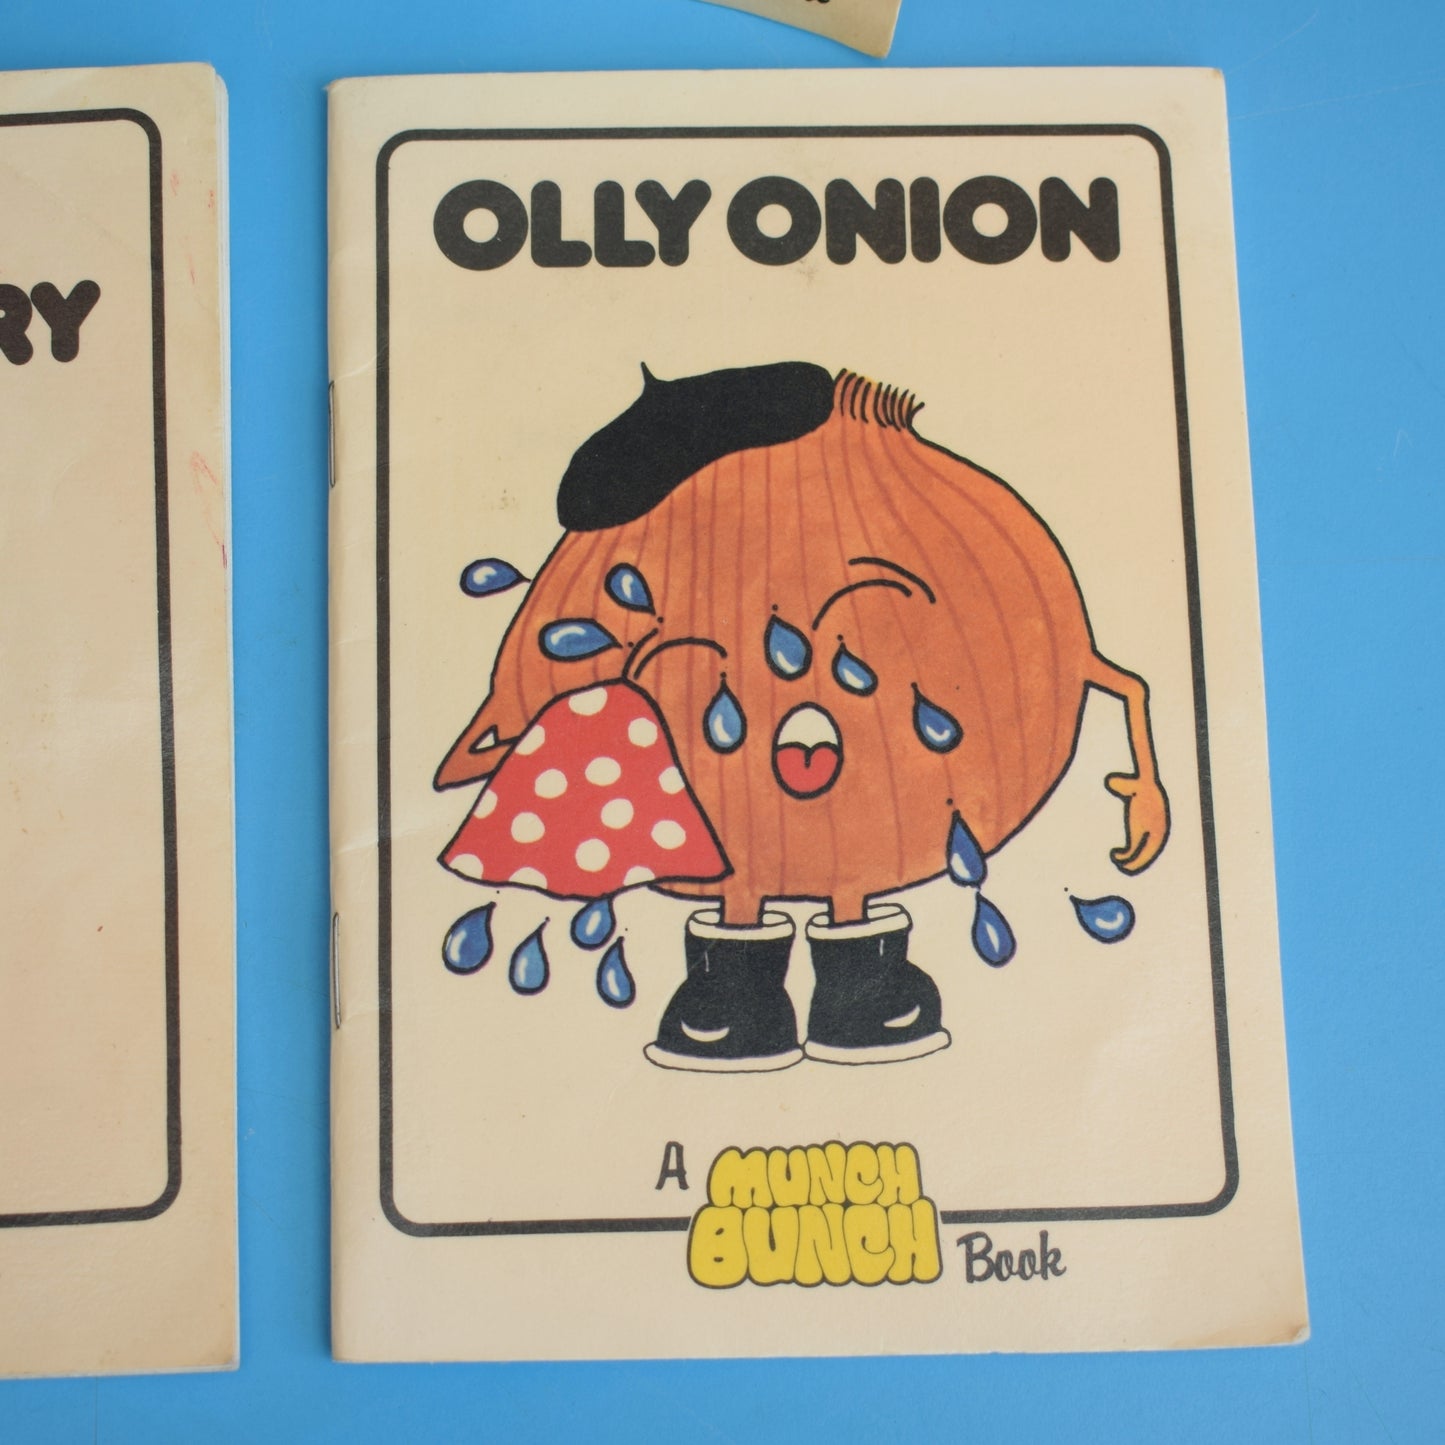 Vintage 1980s Munch Bunch Books